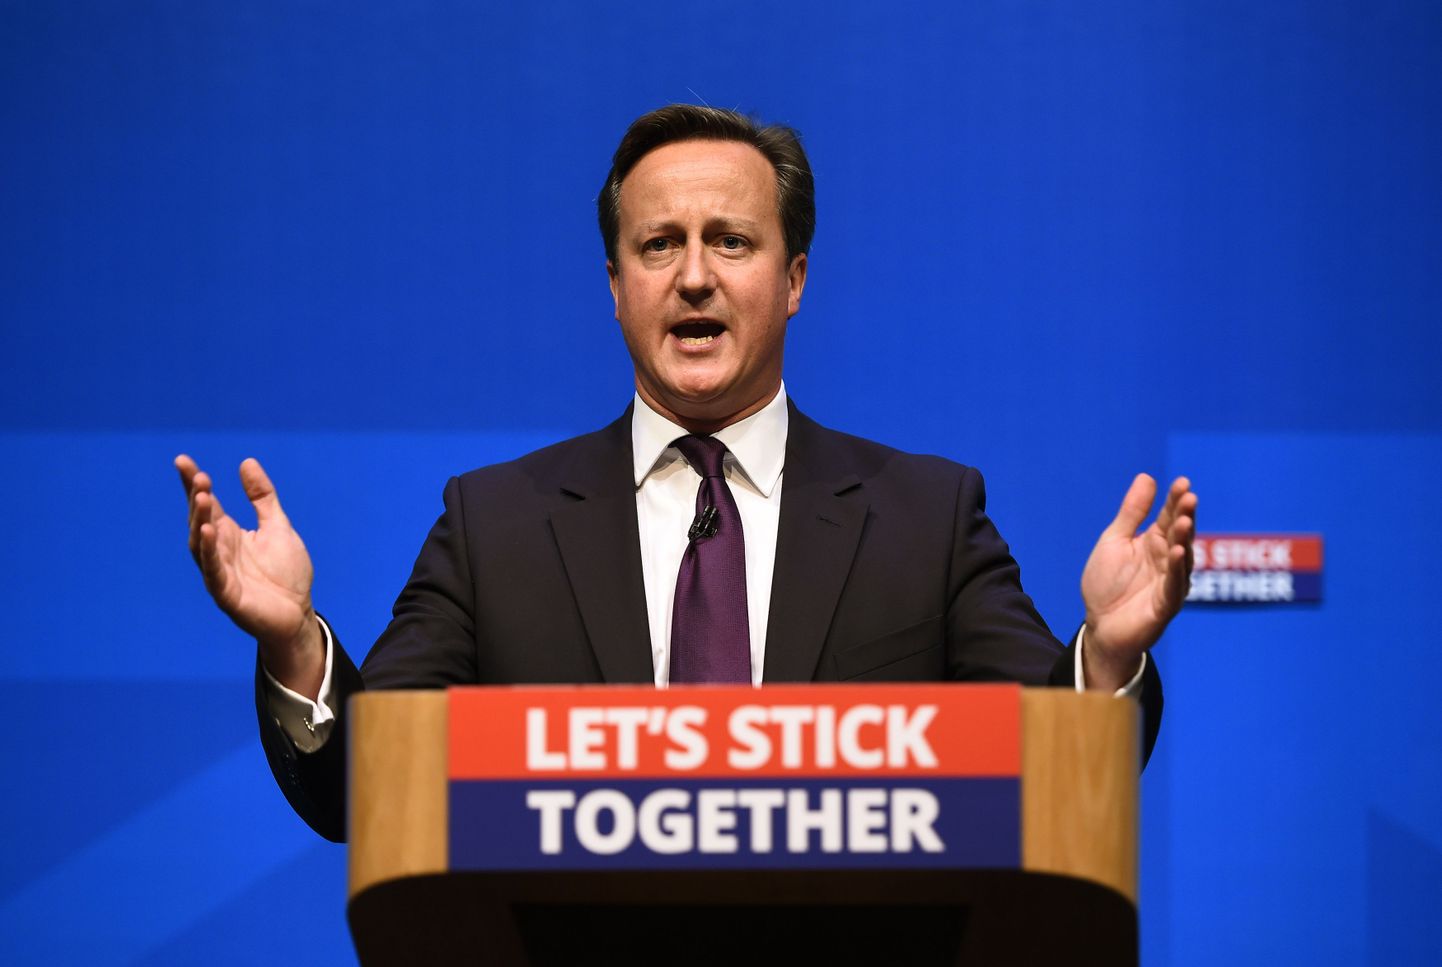 Briti peaminister David Cameron Aberdeenis kõnelemas.